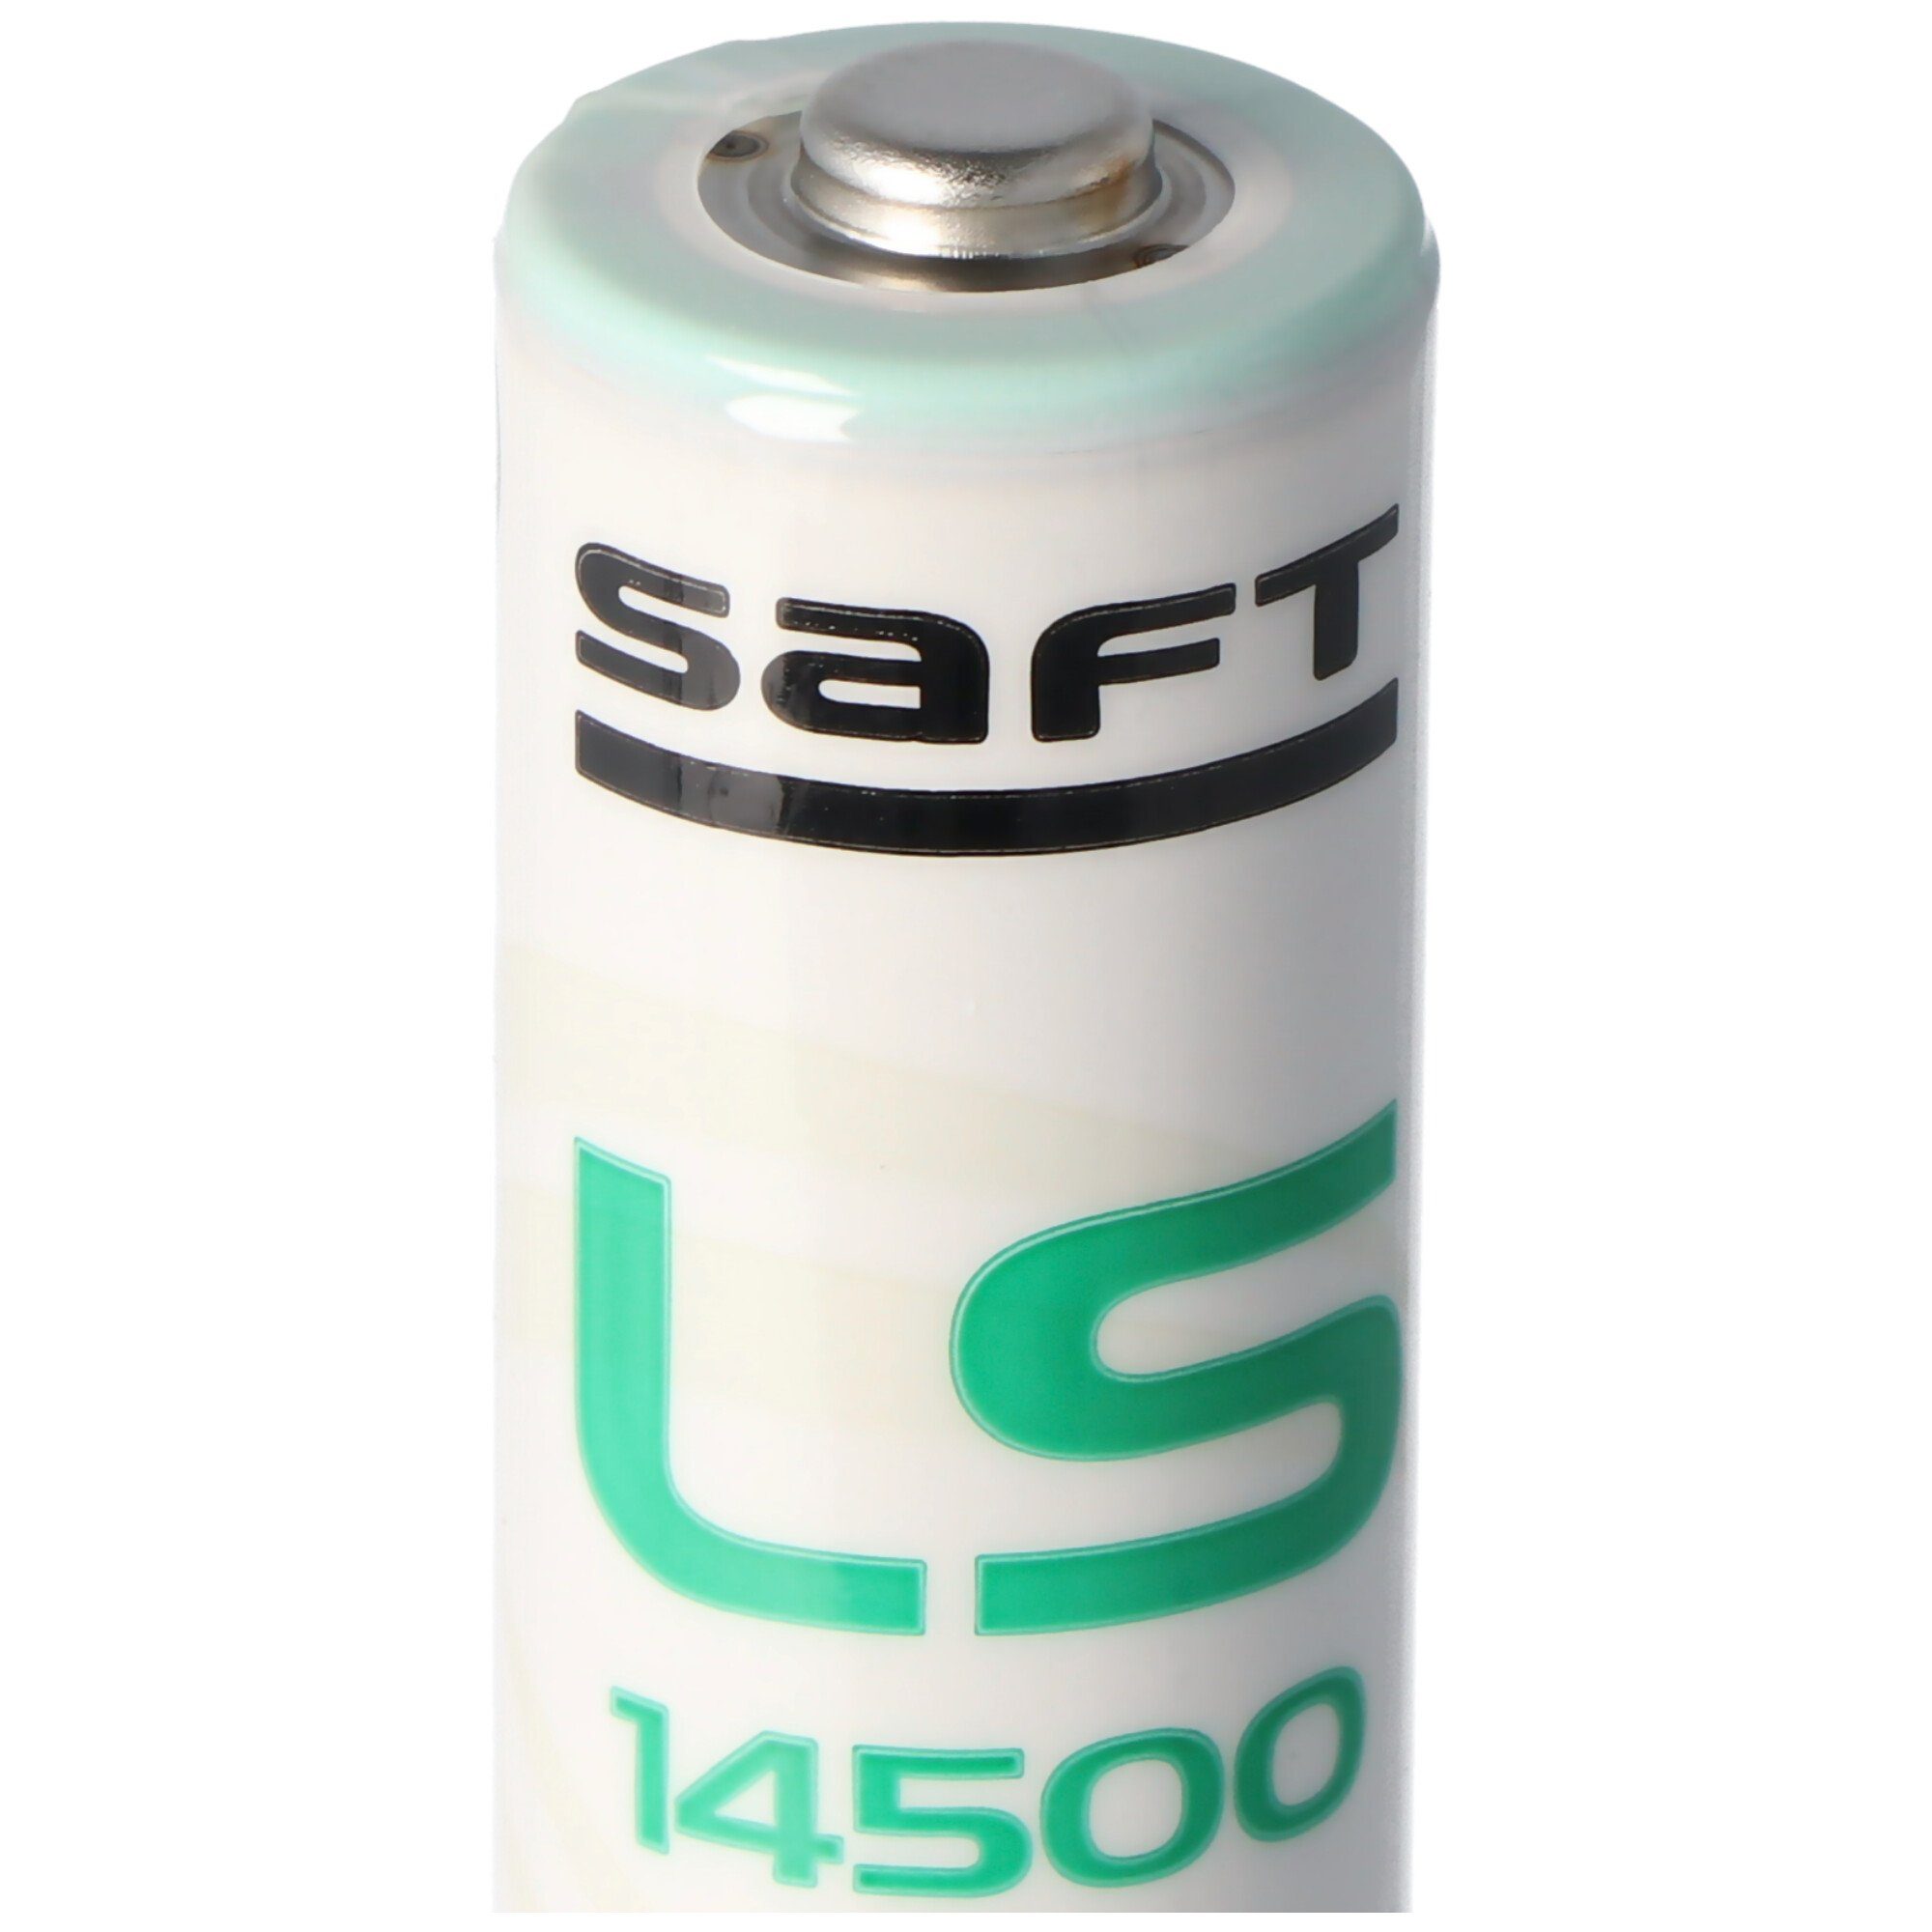 ABUS 2Way Simatic Alarmanlage AA Siemens Saft passend Batterie Secvest Batterie für